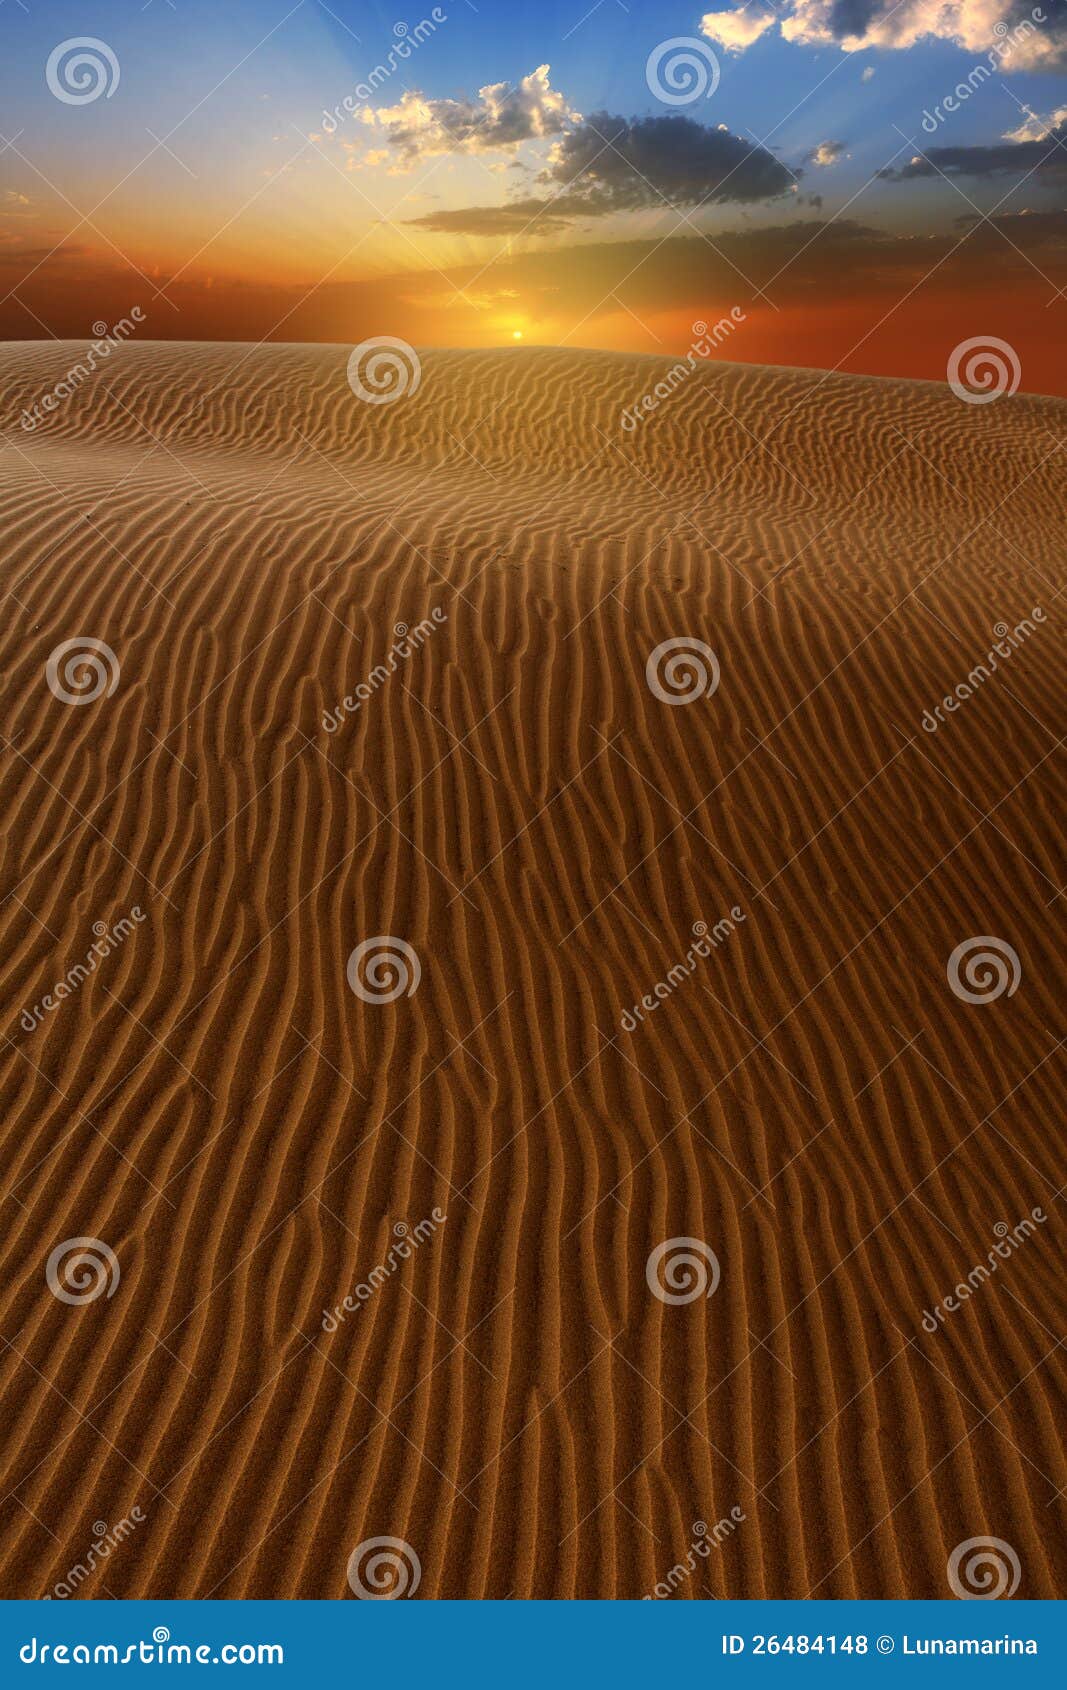 desert dunes sand in maspalomas gran canaria